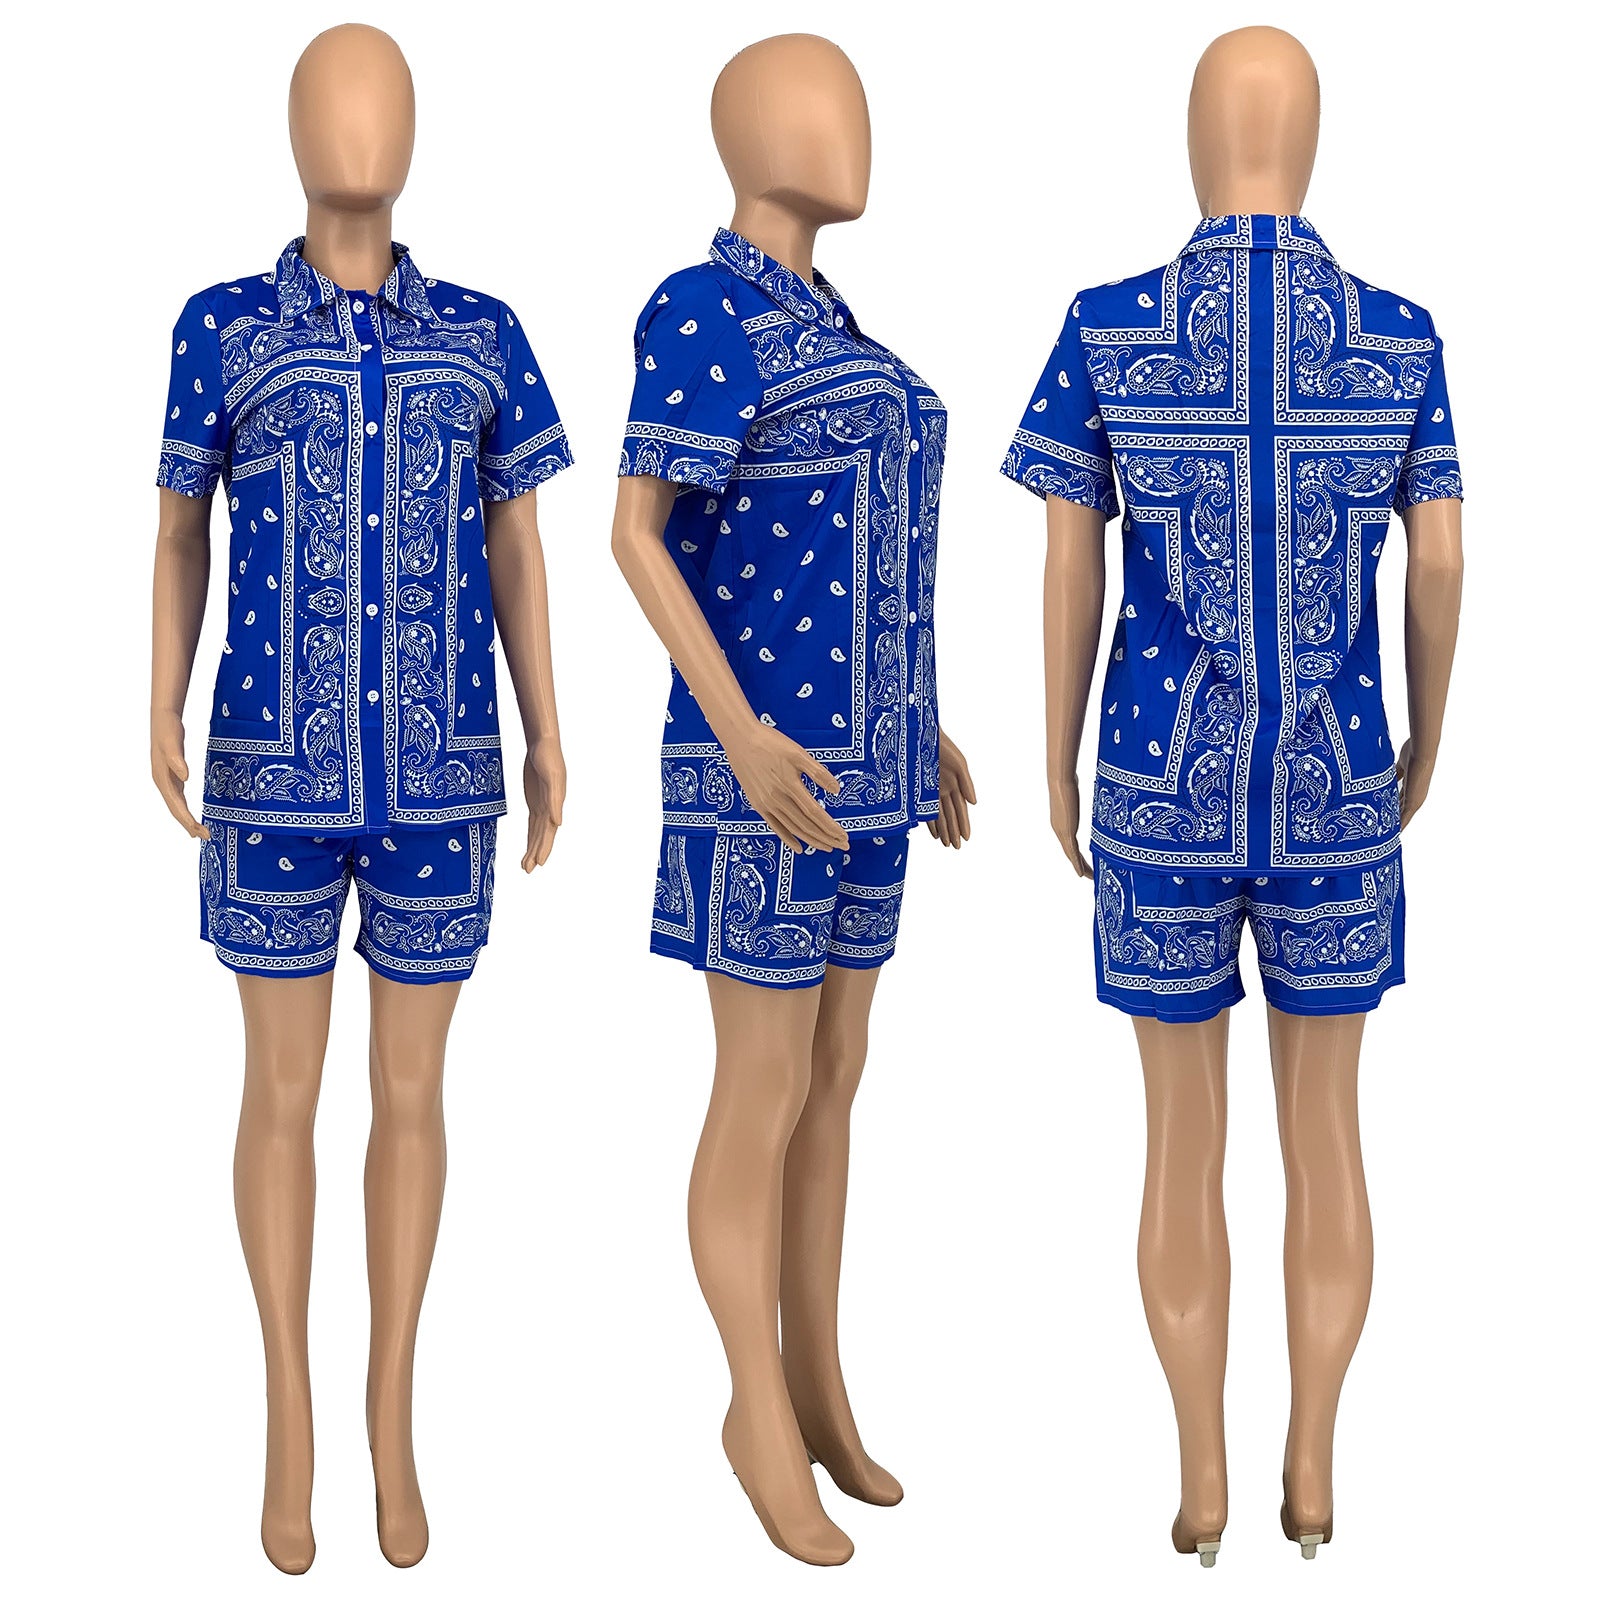 2XL 2 Piece Handkerchief Bandana Print Turn Down Collar Short Sleeve Top w/ Shorts Plus Size Women